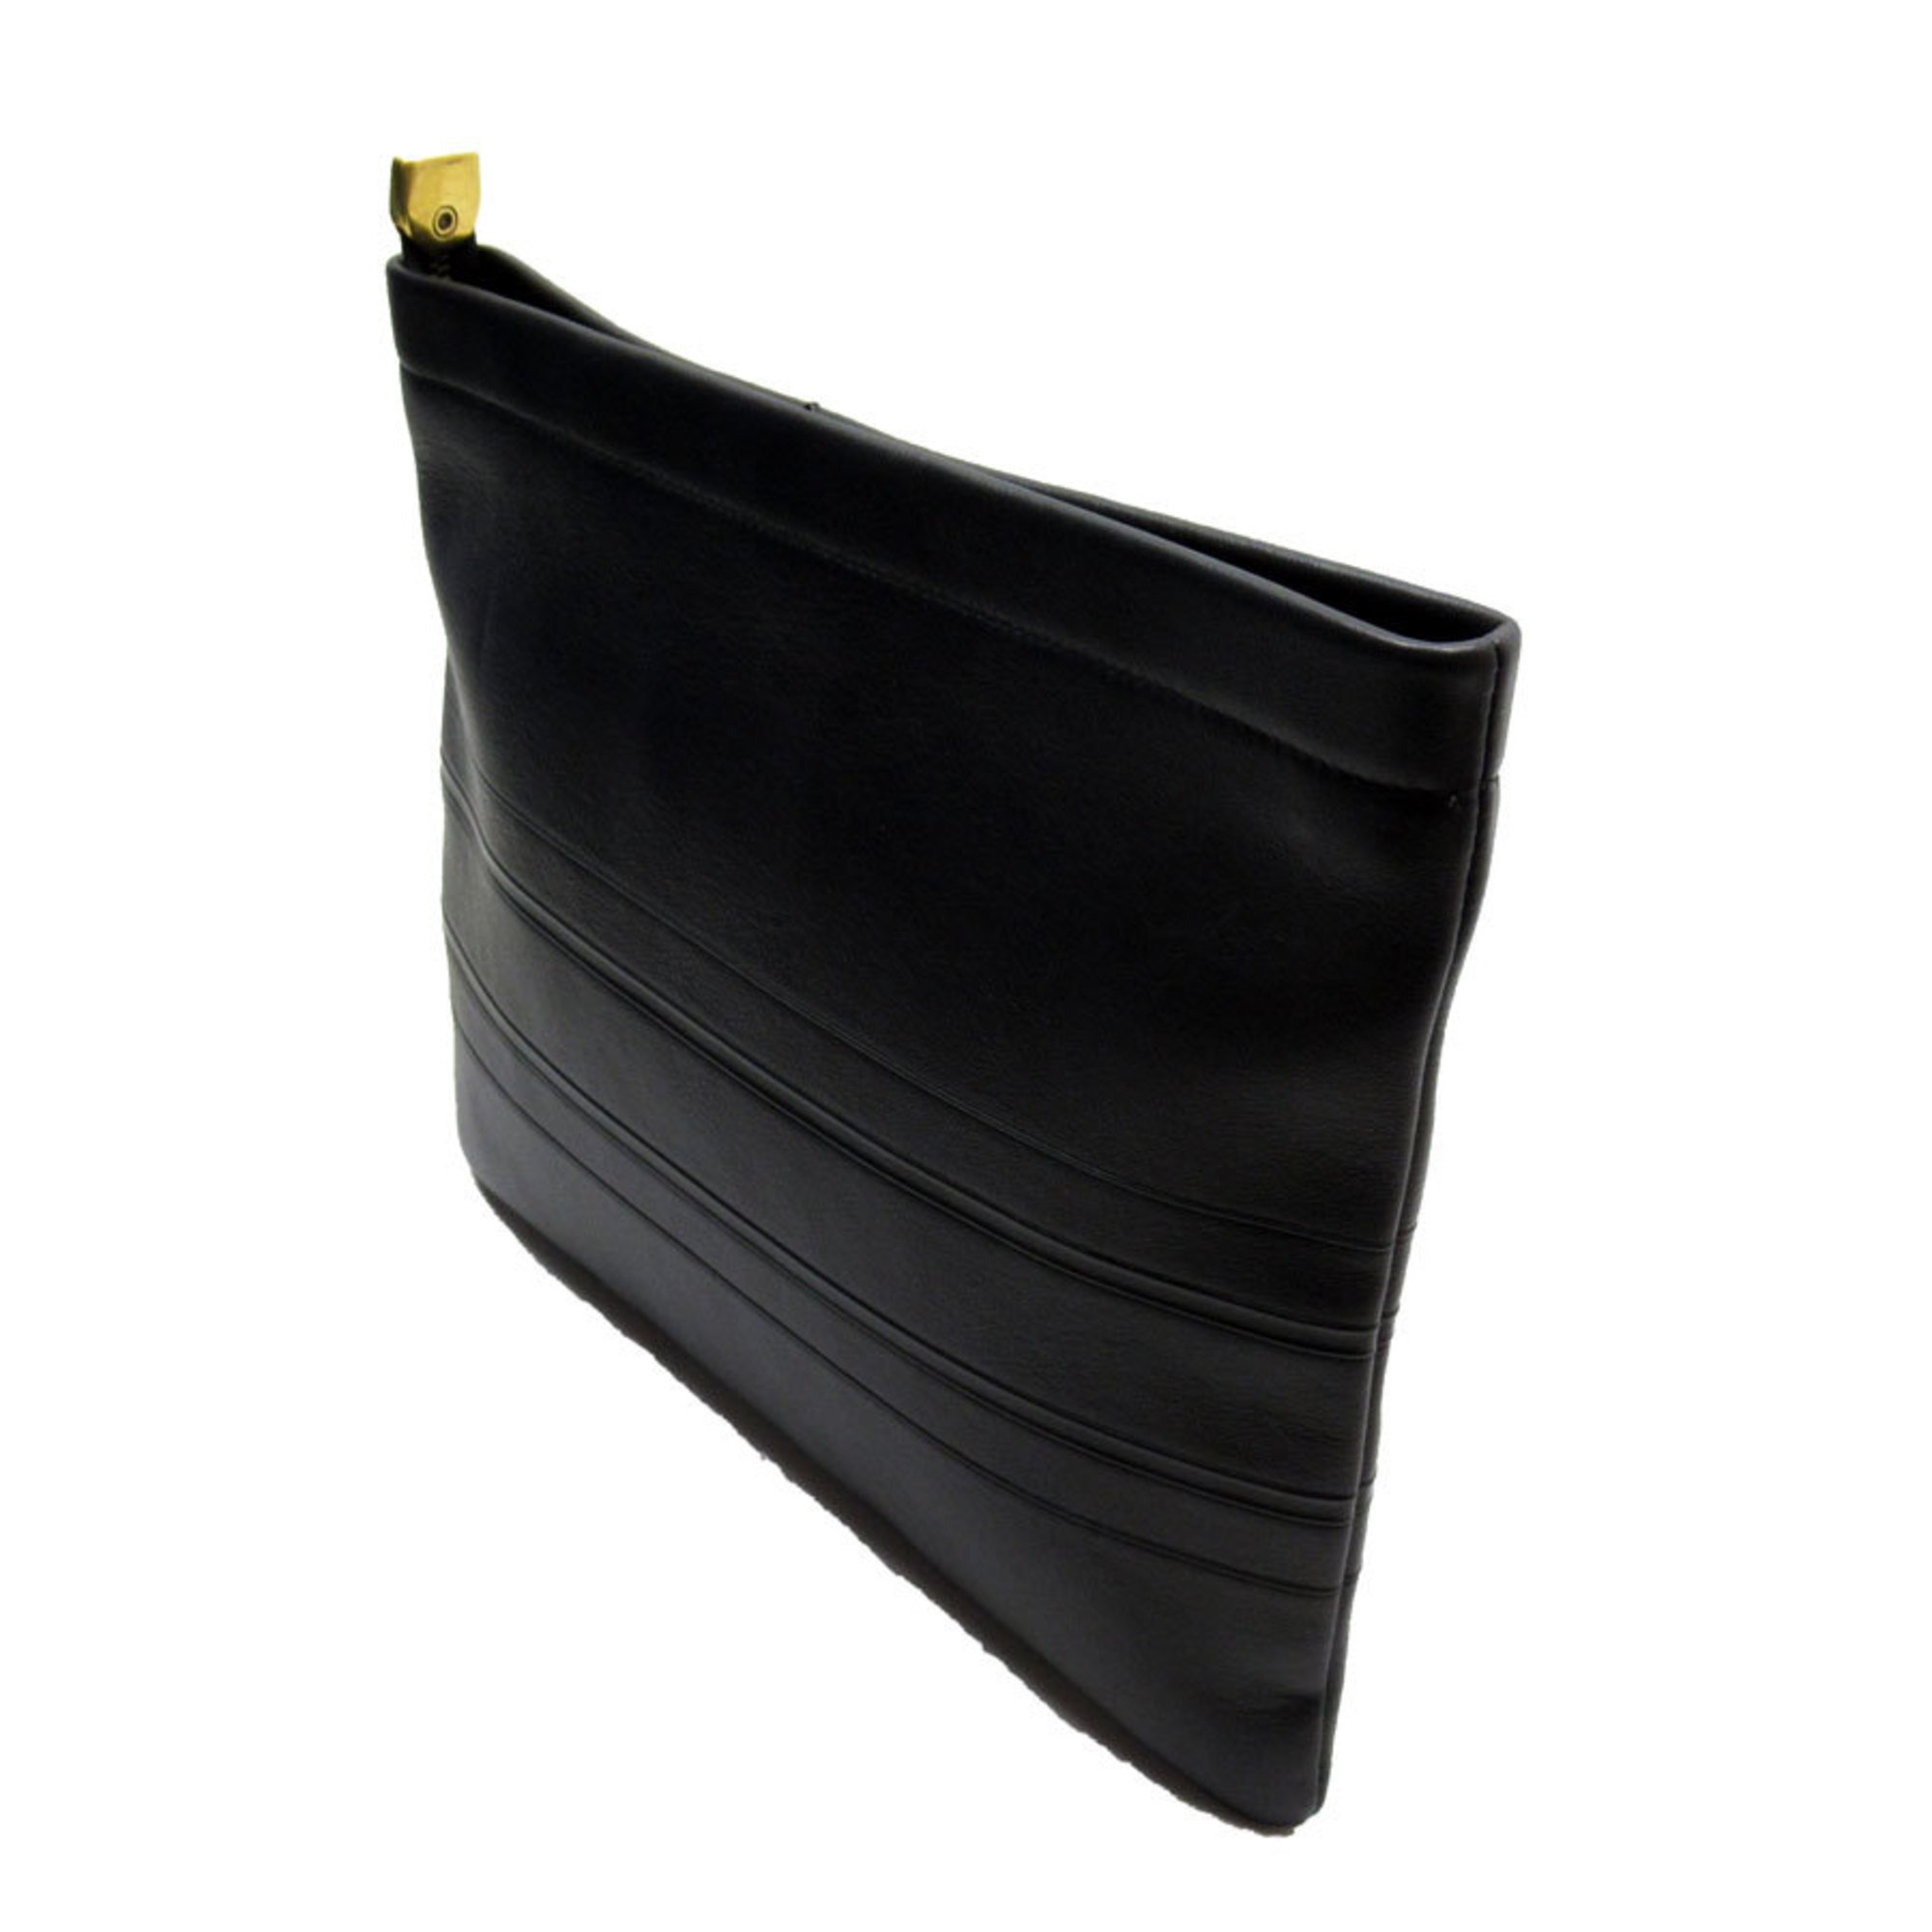 Christian Dior Clutch Bag Leather Black Gold Unisex